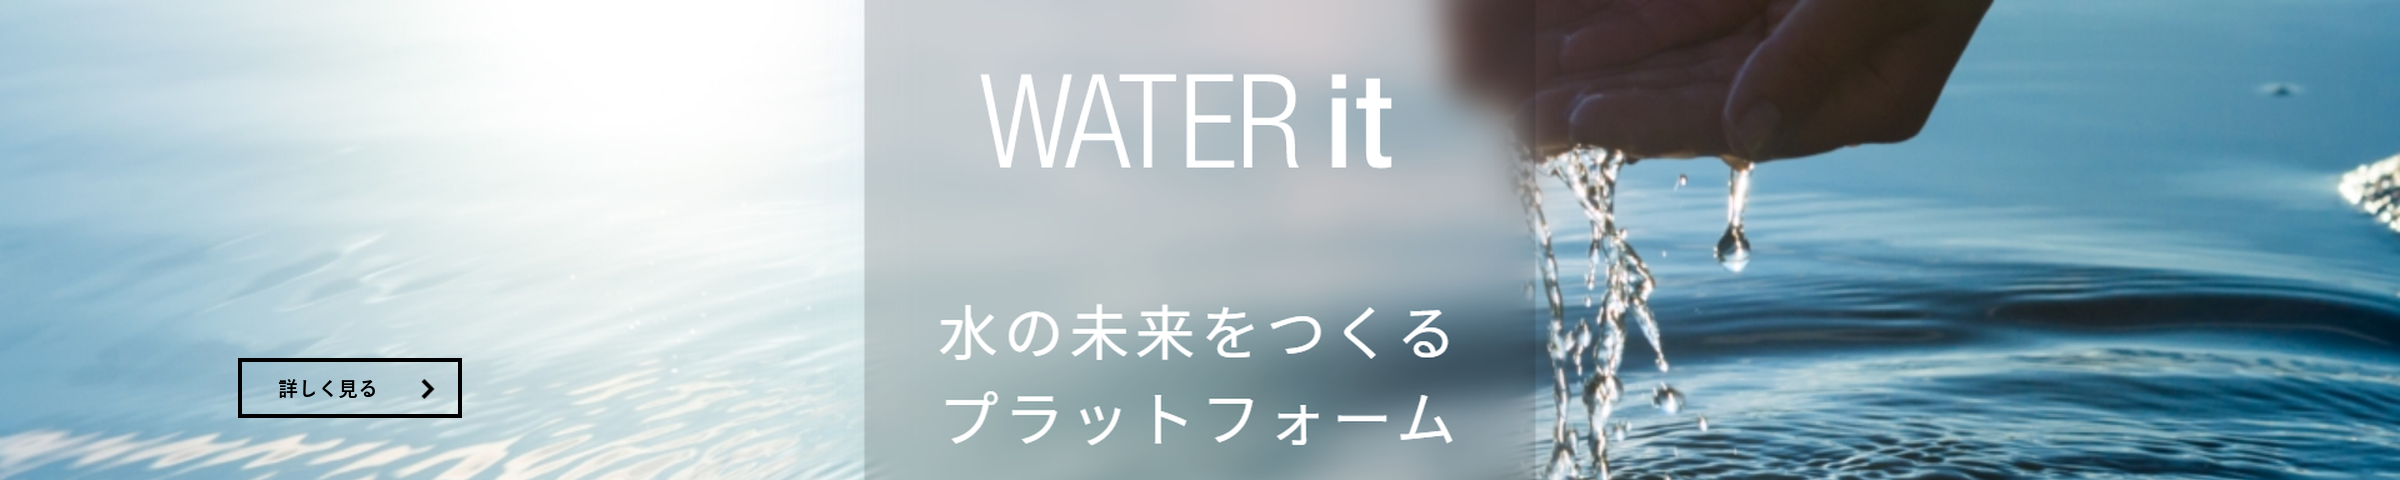 WATER it 水の未来をつくるプラットフォーム